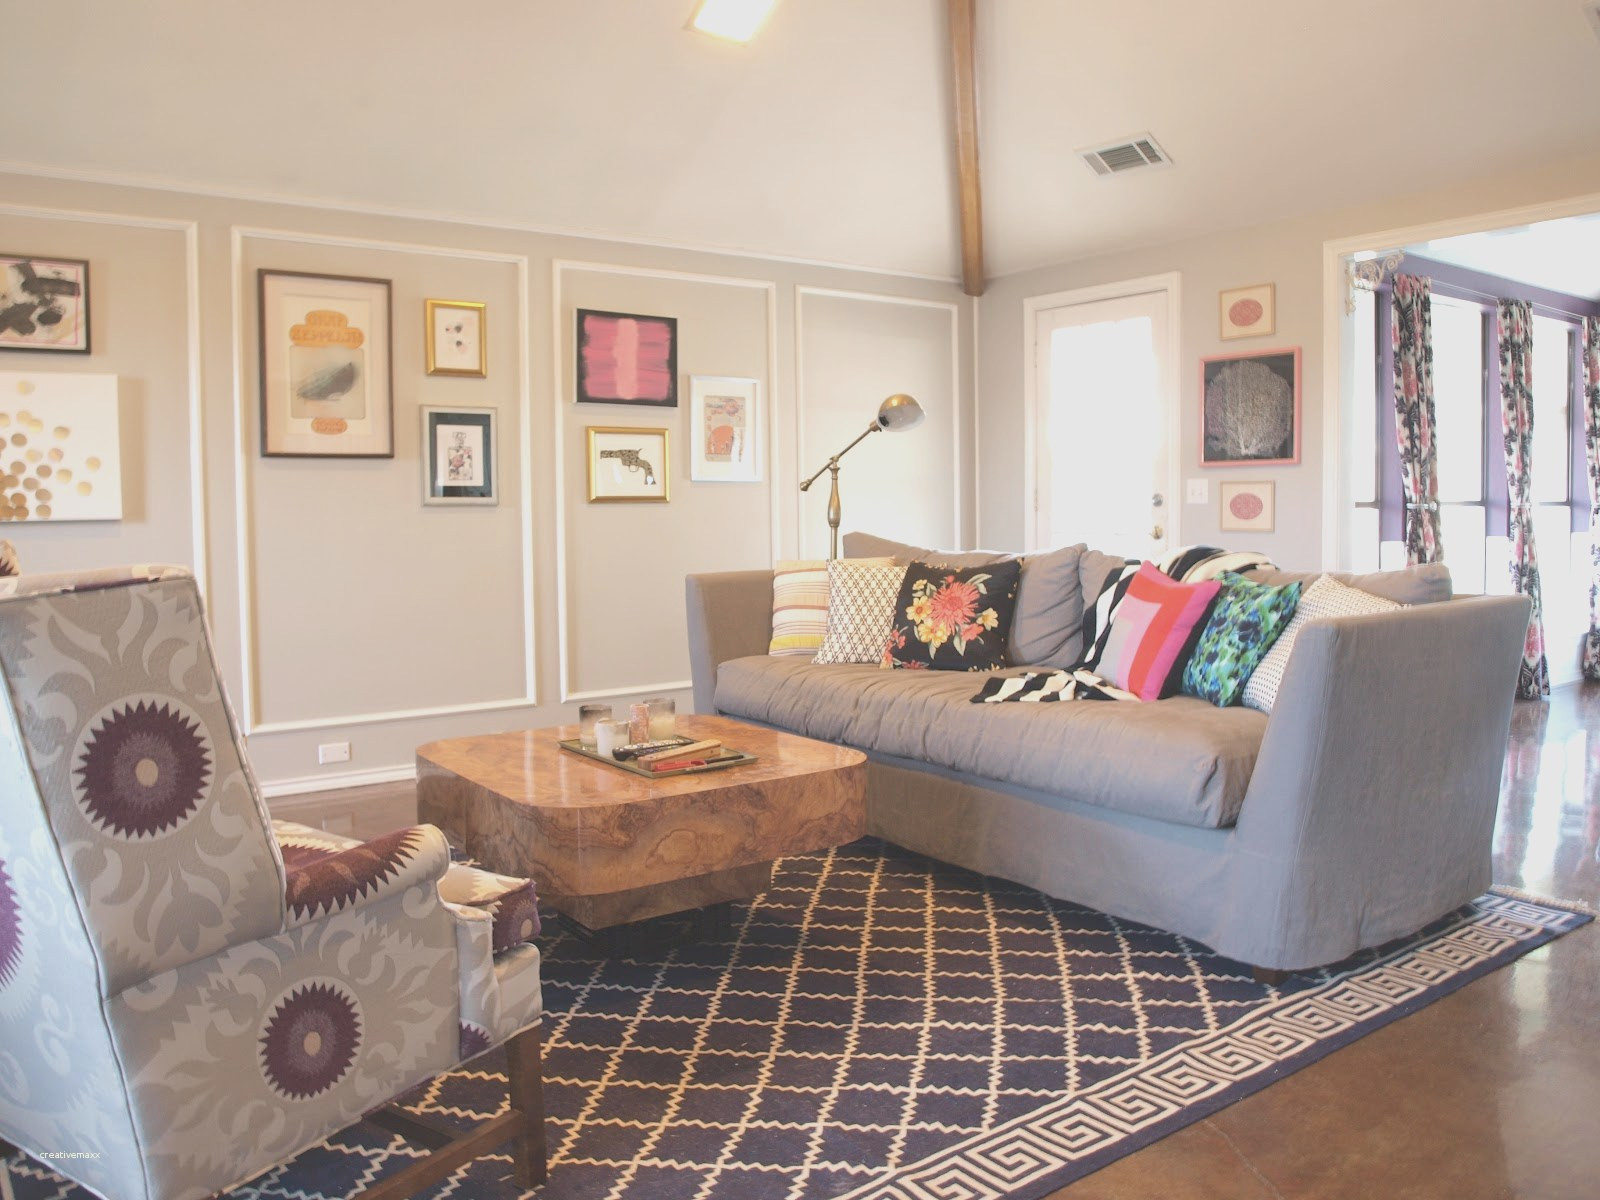 Walmart Living Room Rugs
 17 Luxury Diy Rug Ideas for Interior Decorating A